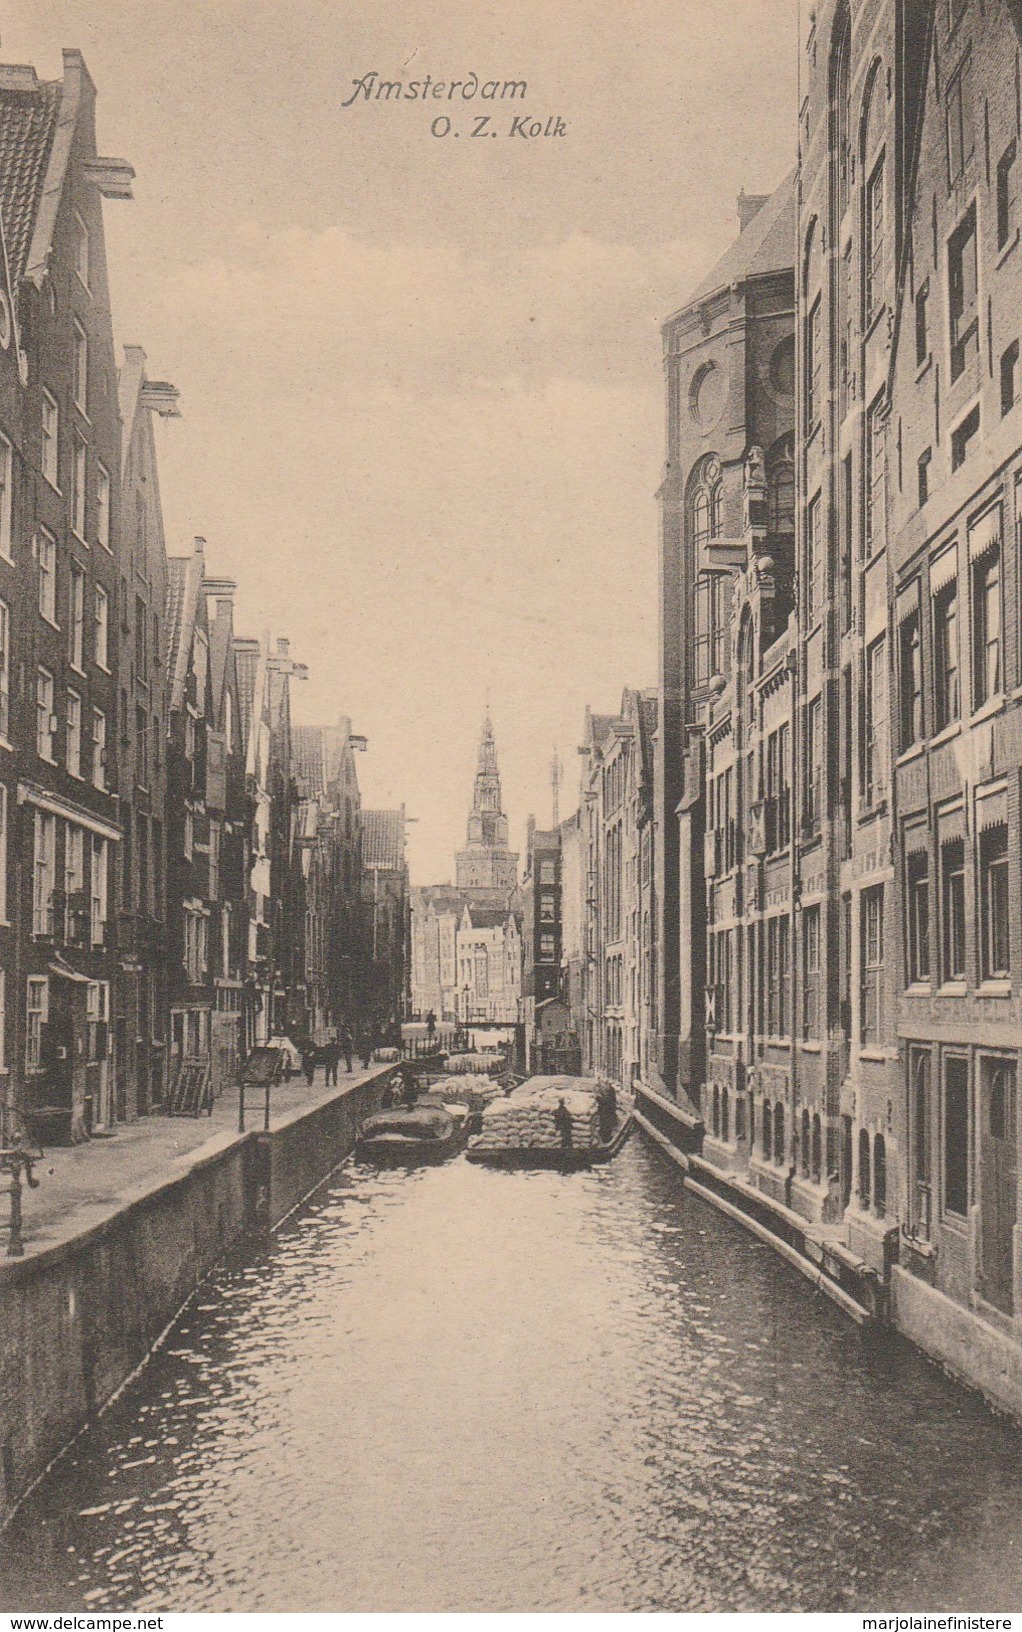 AMSTERDAM. - O. Z. Kolk. Weenenk & Snel, Den Haag N° 16 23329 - Amsterdam